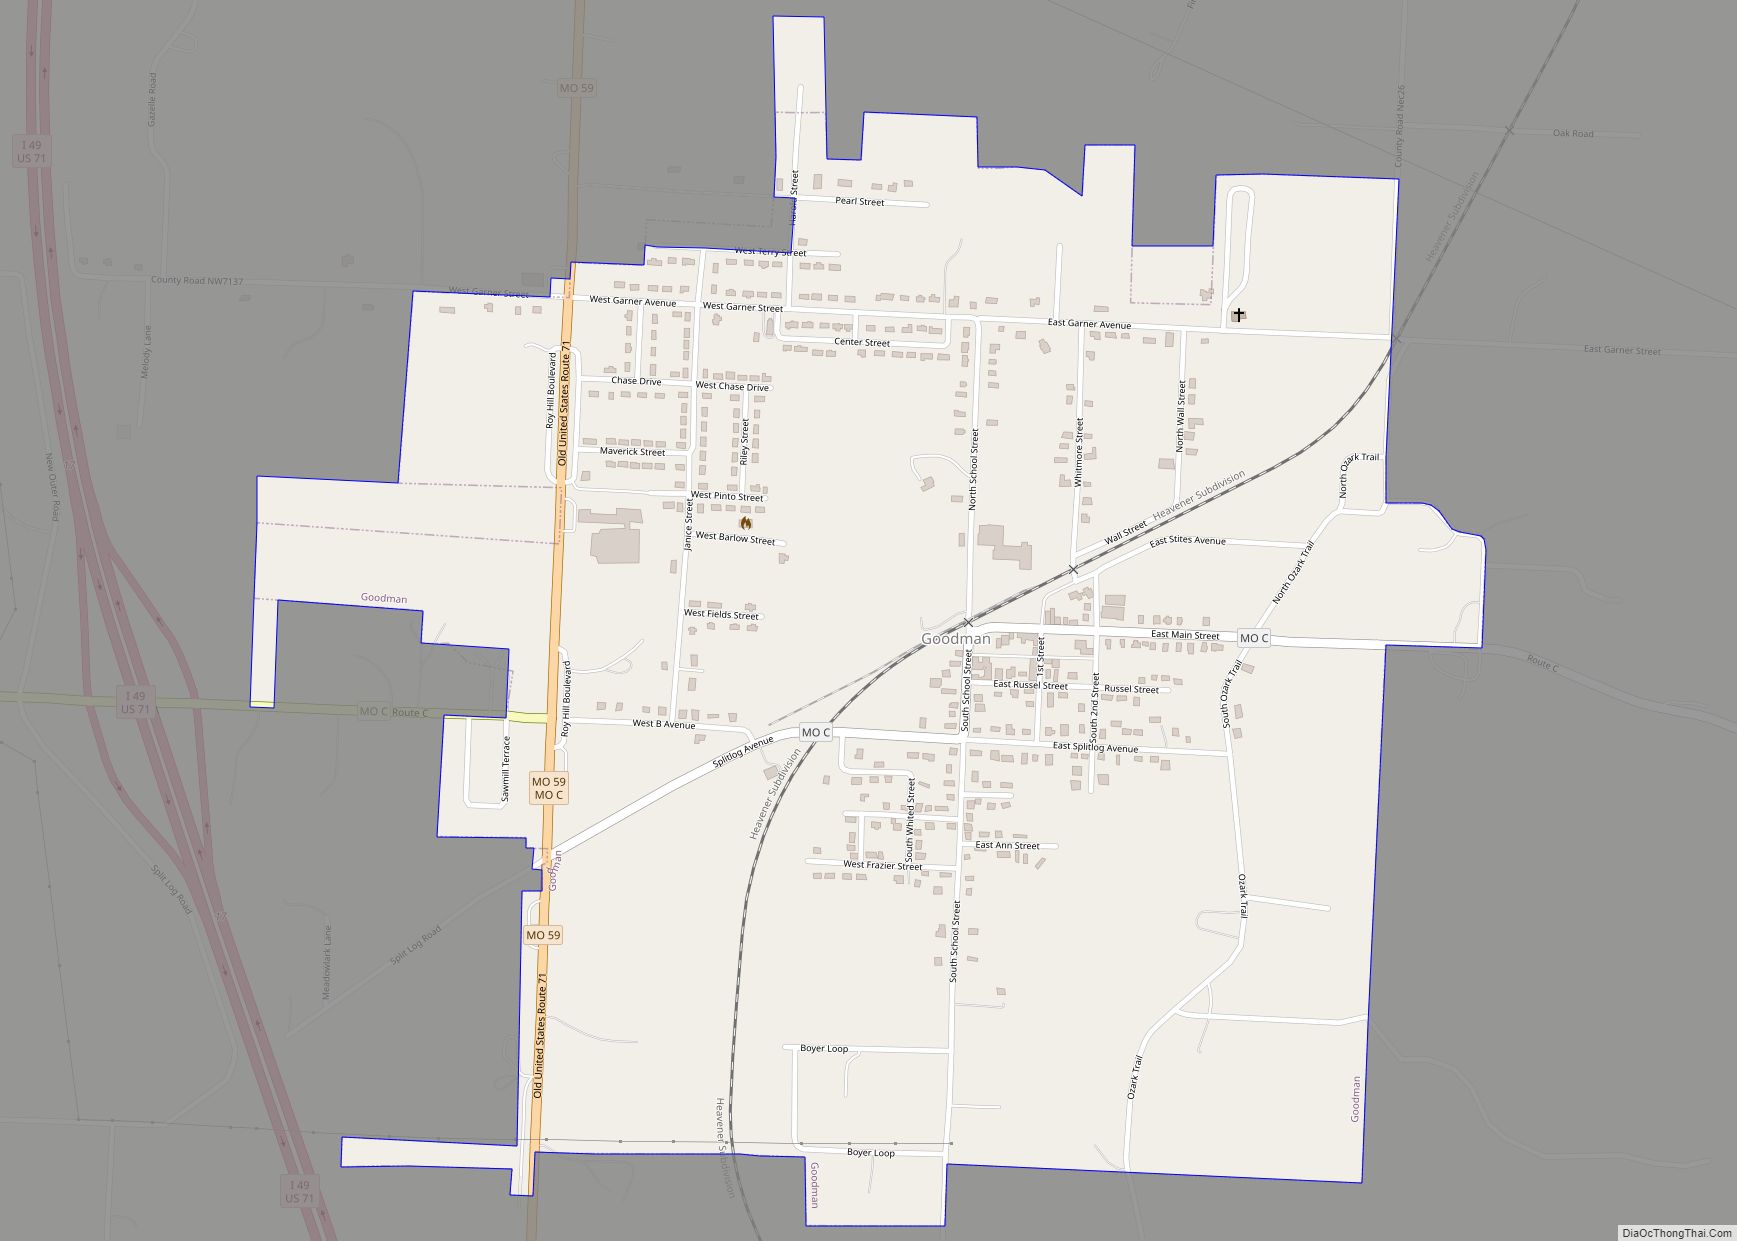 Map of Goodman city